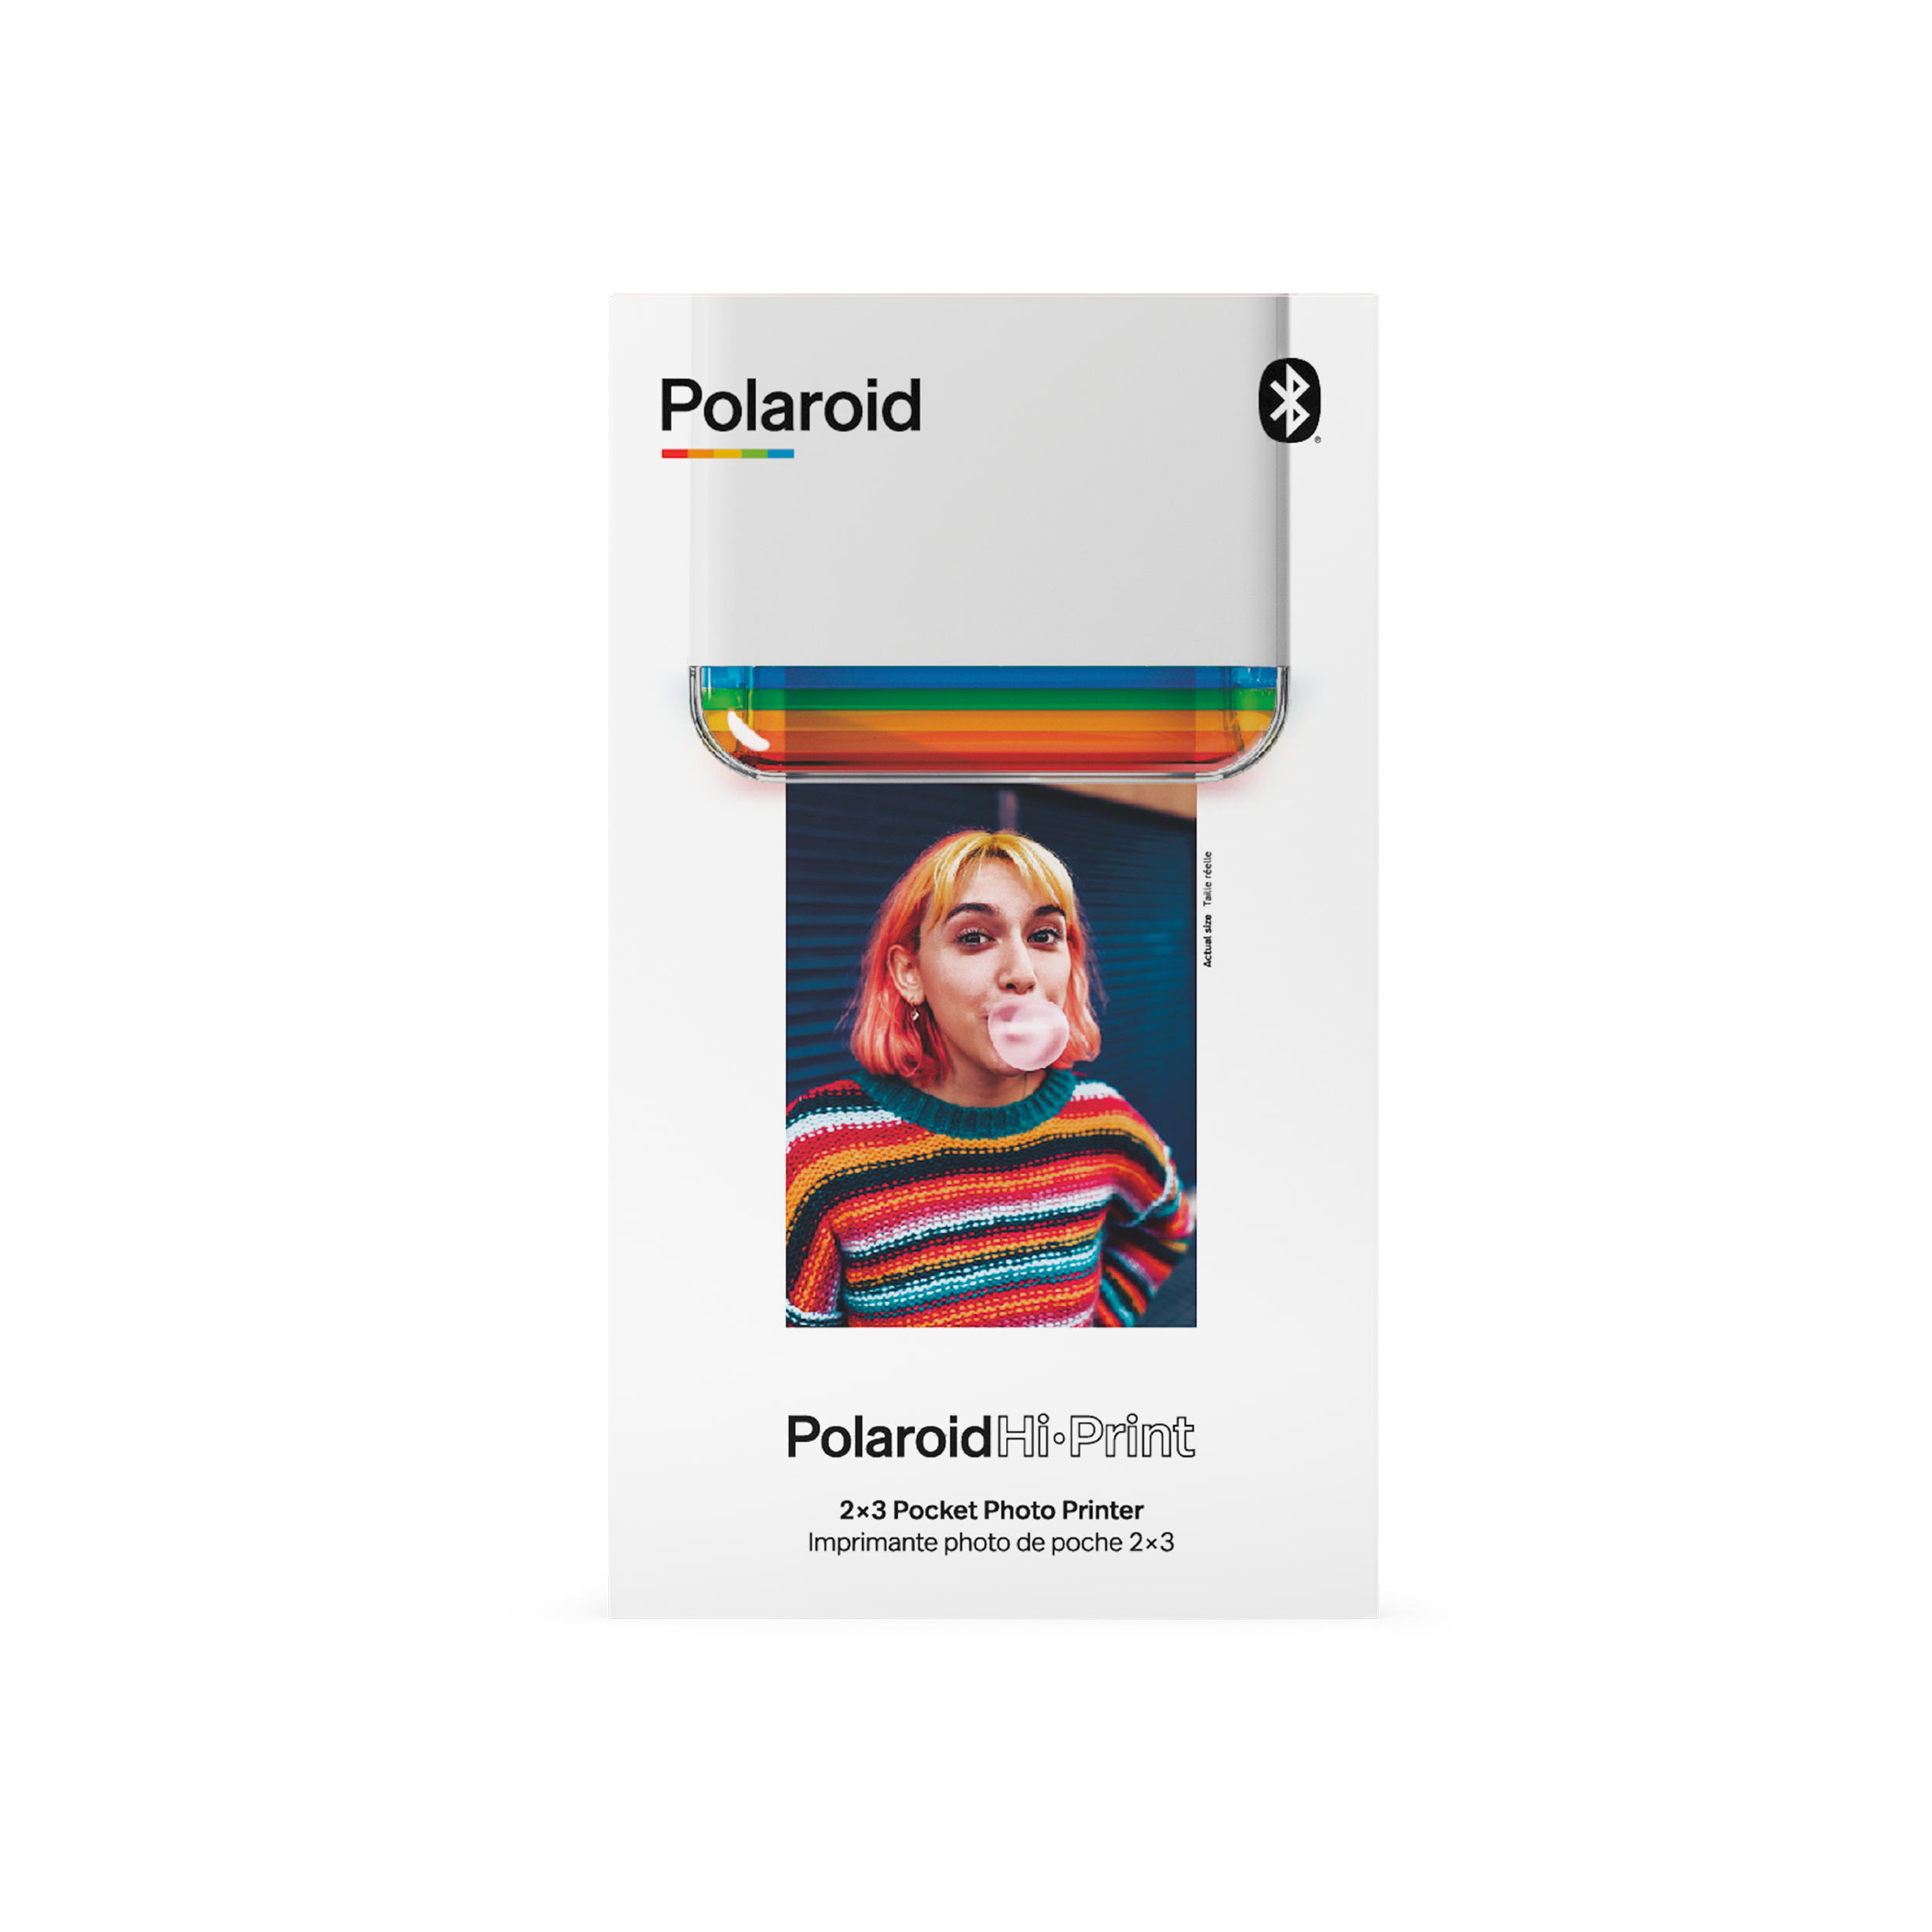 list item 7 of 9 Polaroid Hi Print 2x3 Pocket Photo Printer